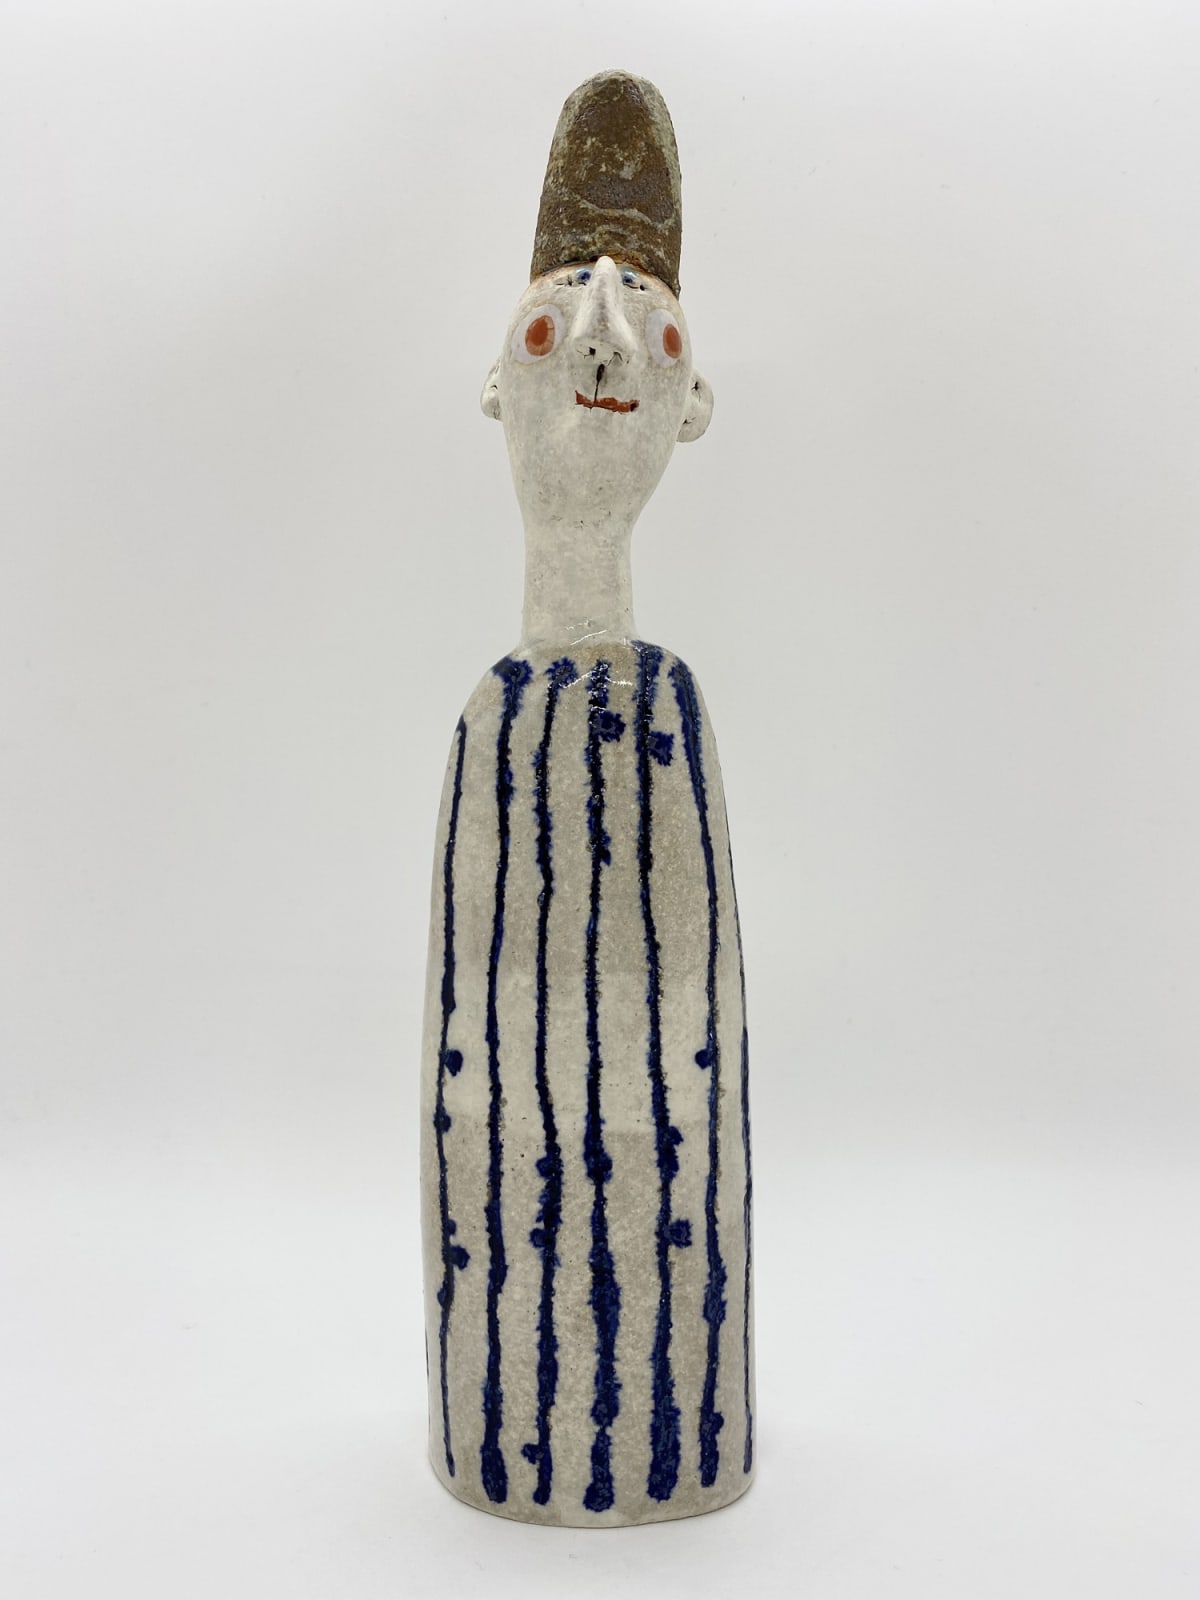 Jane Muir, Man in Hat - Blue stripes, 2021 | Sarah Wiseman Gallery